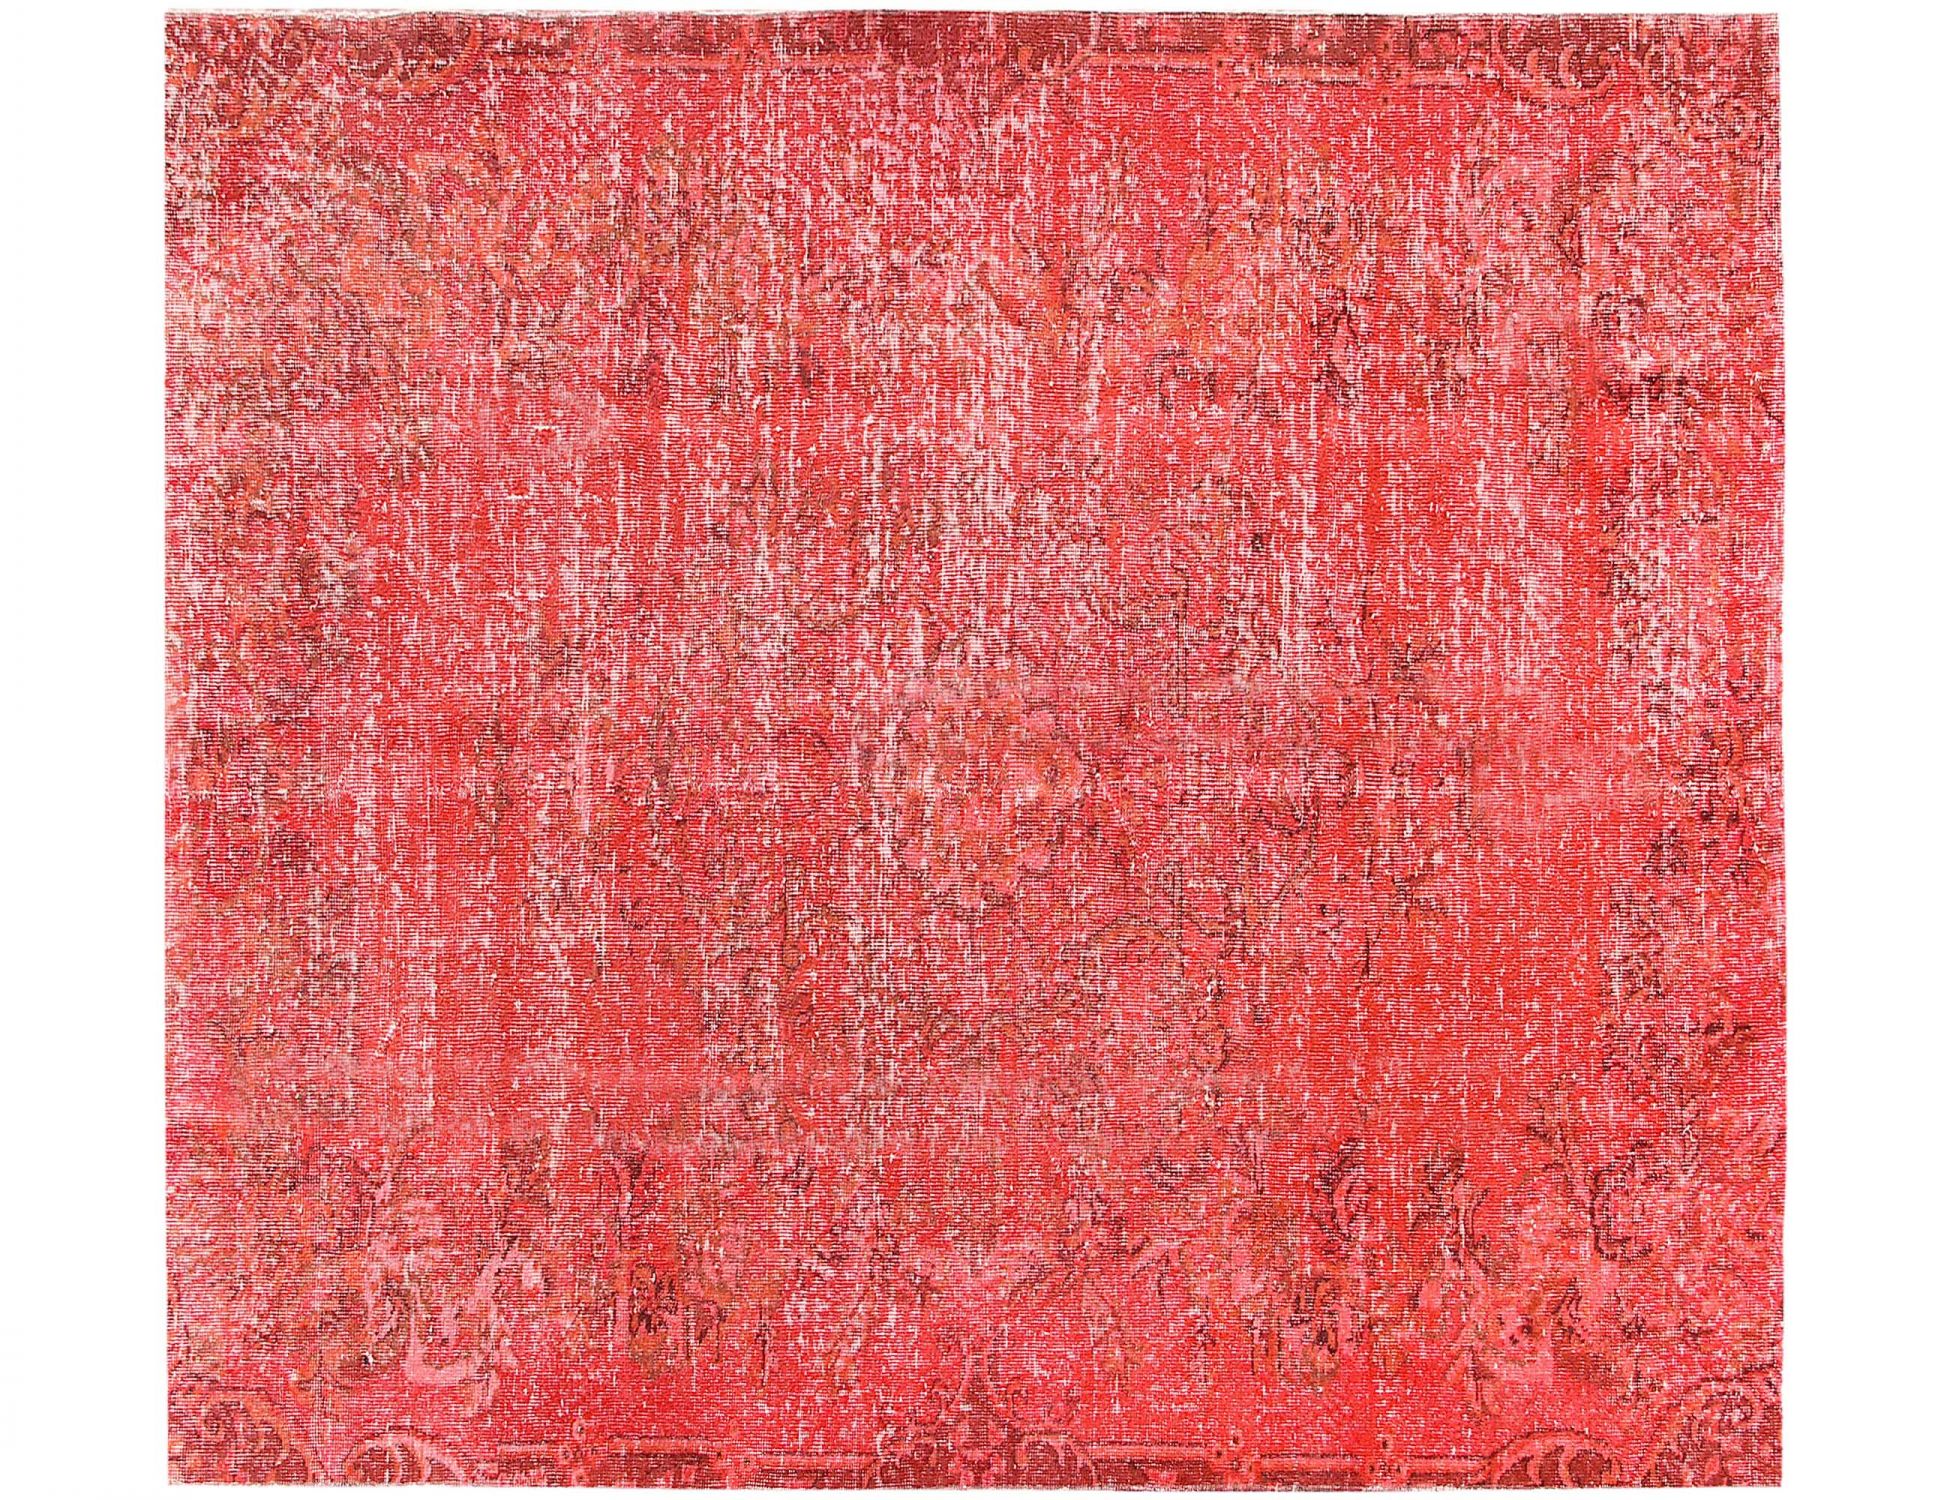 Quadrat Vintage Teppich  rot <br/>170 x 170 cm